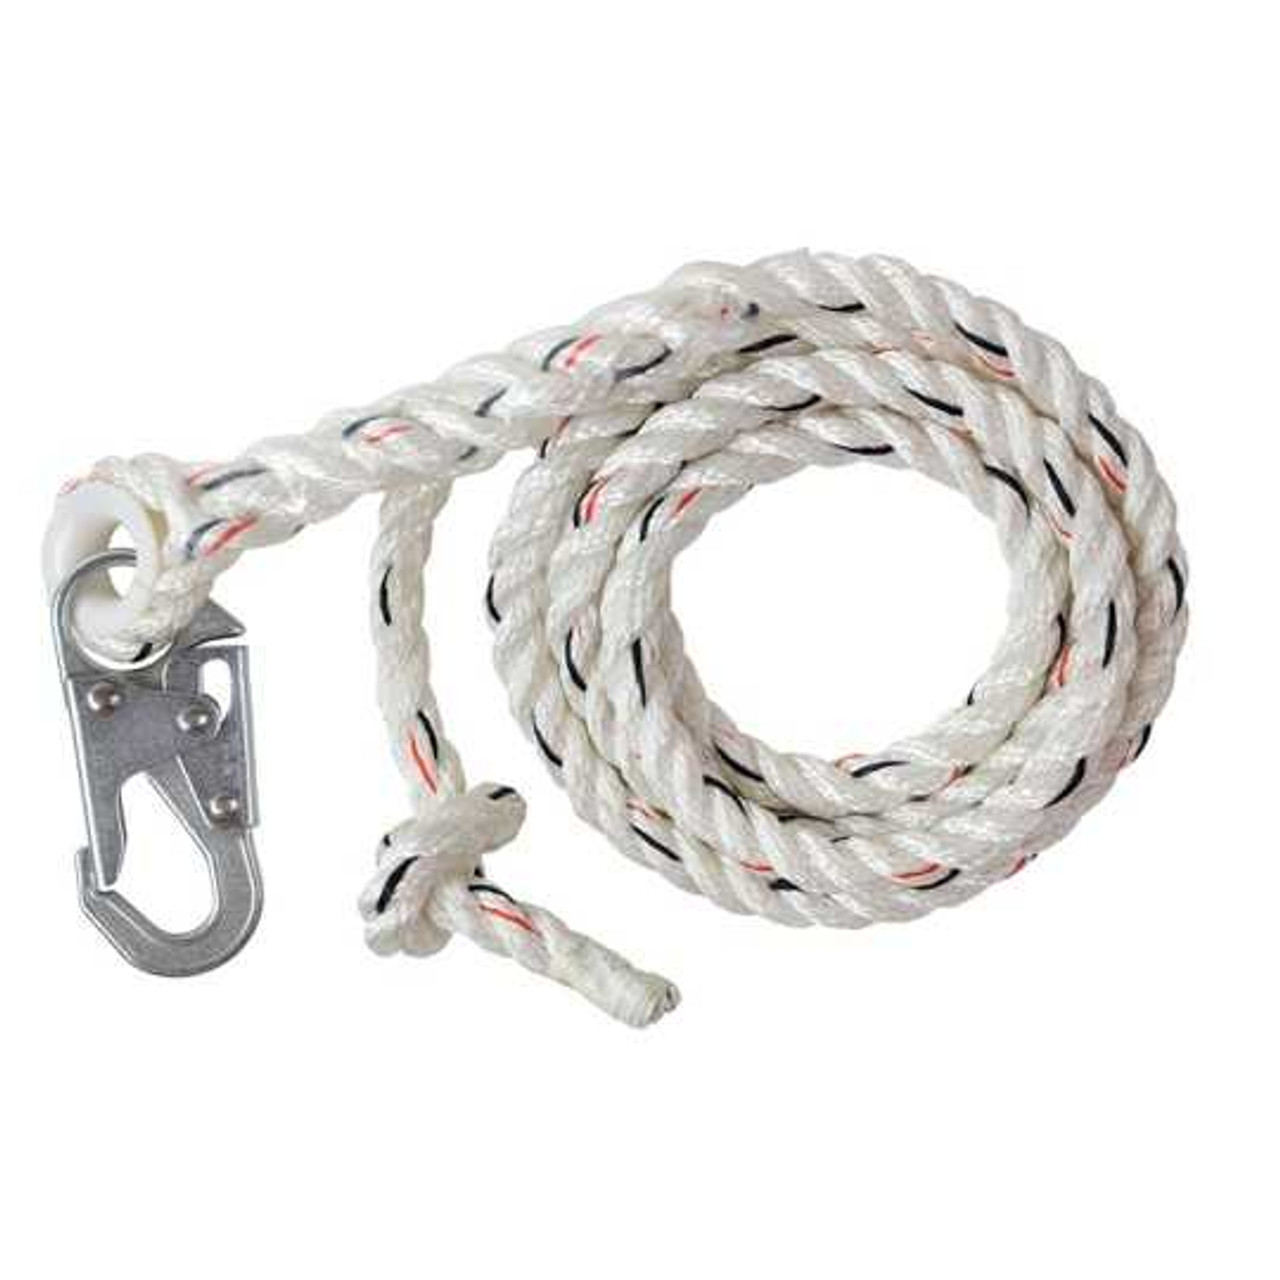 Vertical Lifeline w/Snap Hook Rope Size: 25' C7052